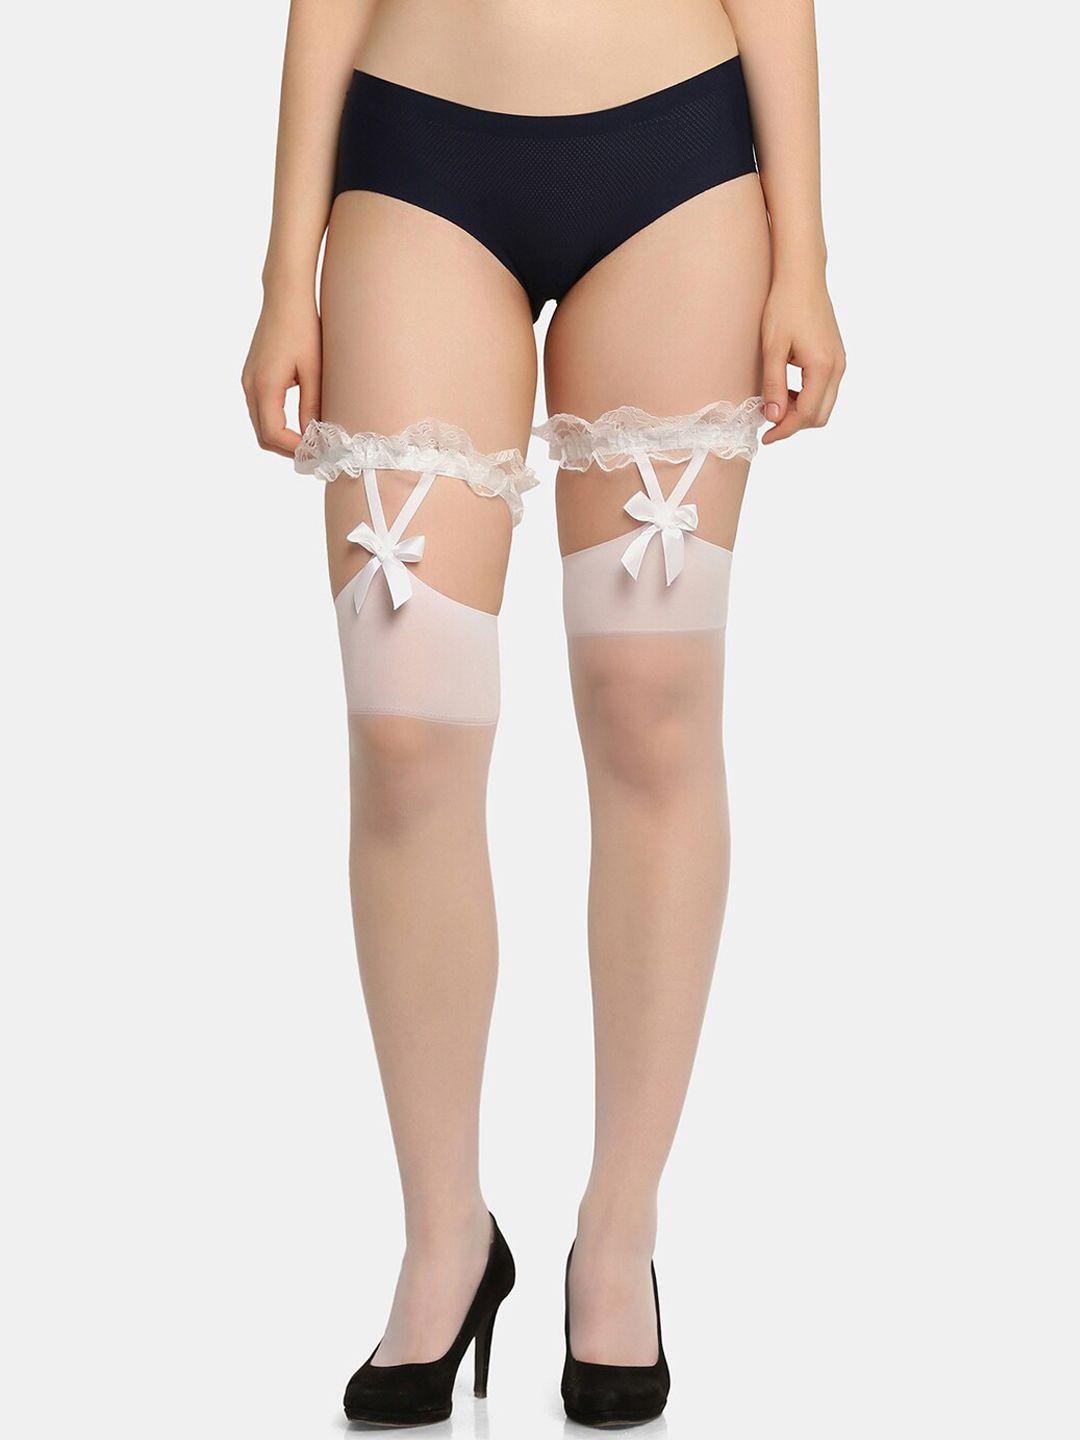 da intimo women white solid lace stockings